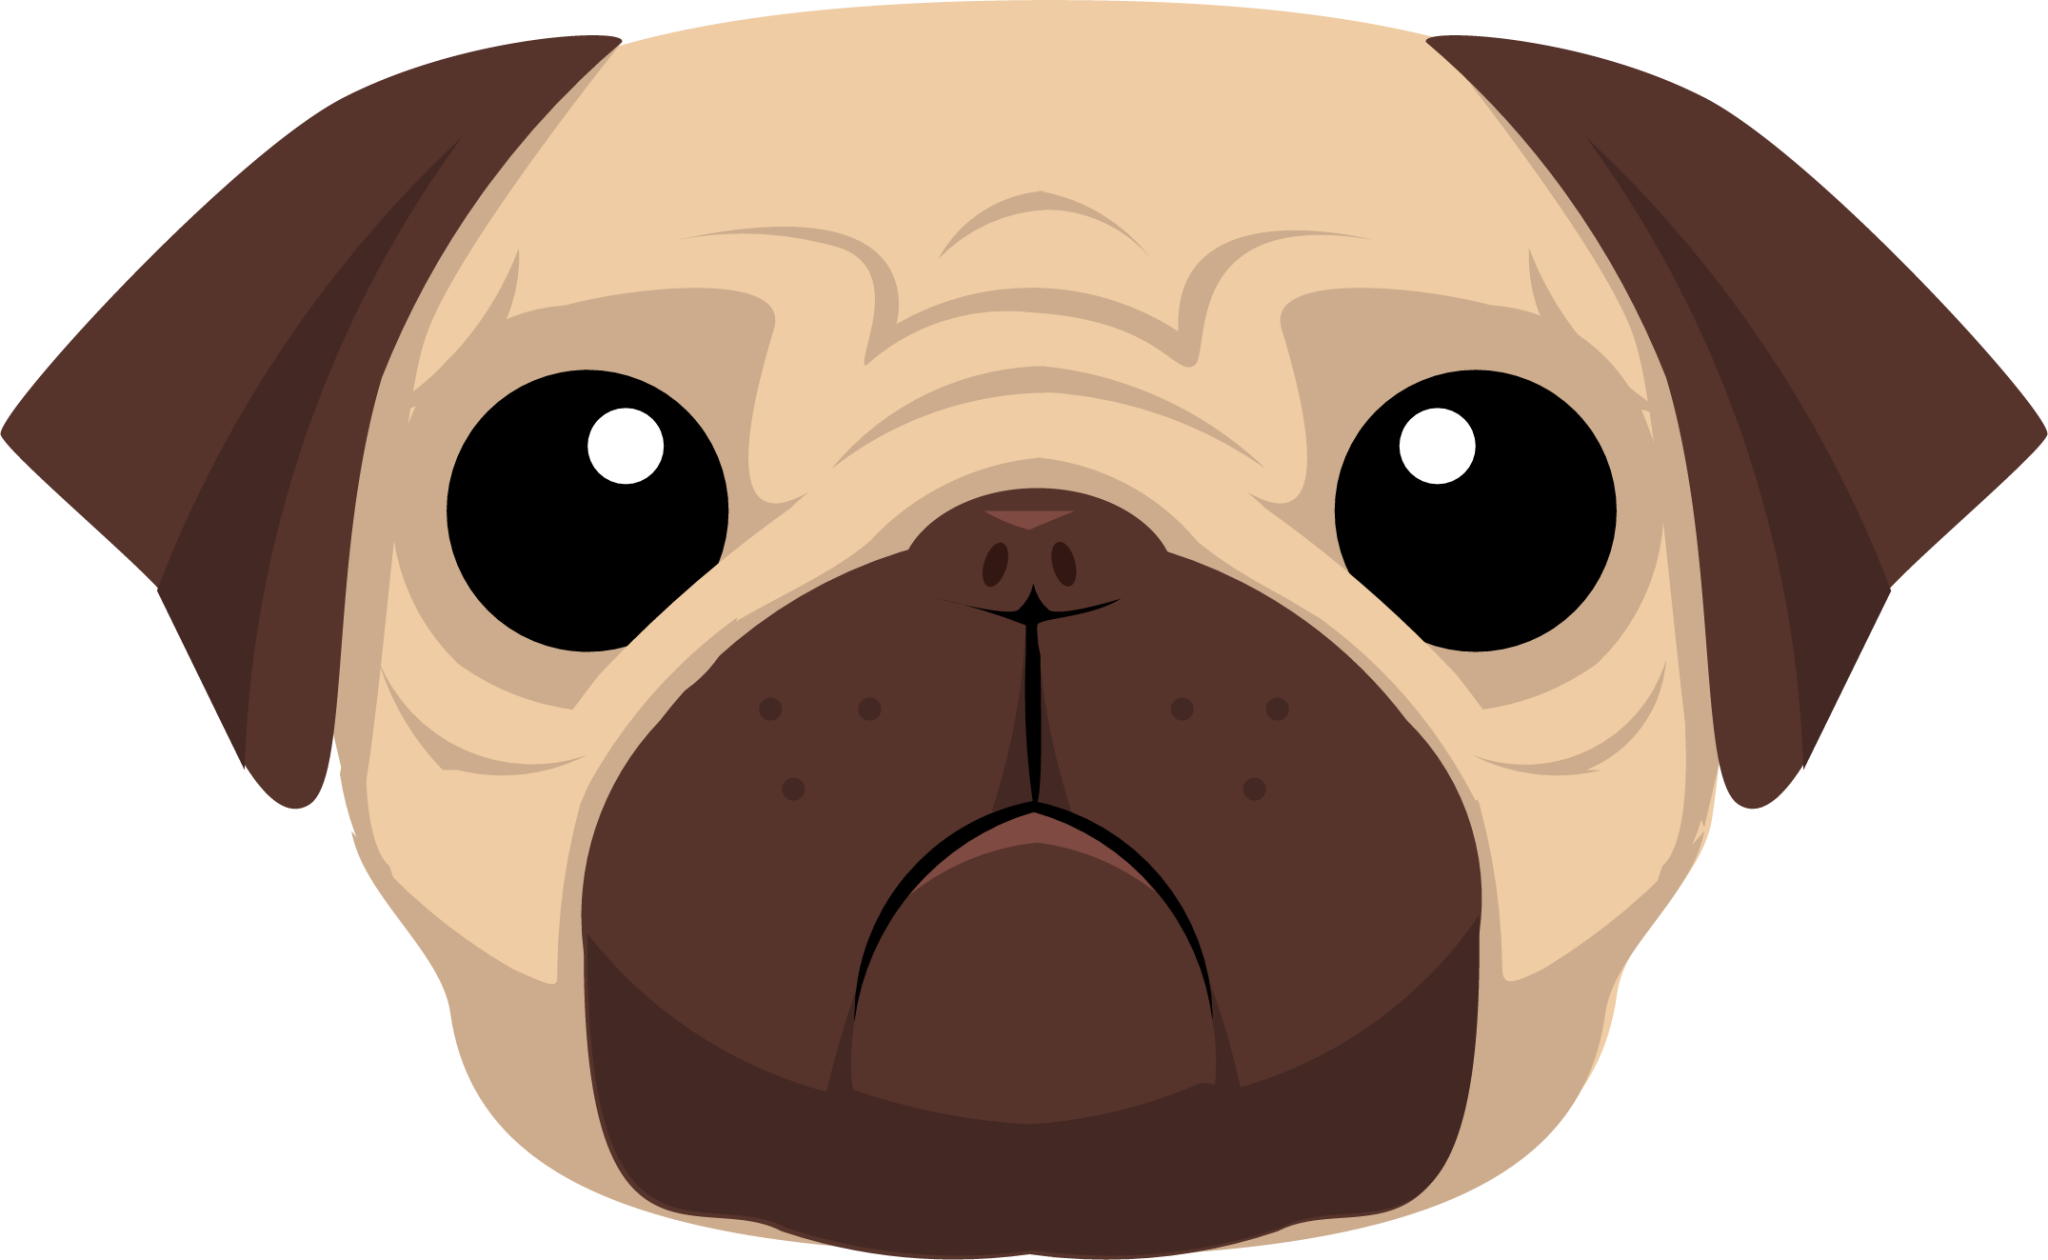 file type pug icon